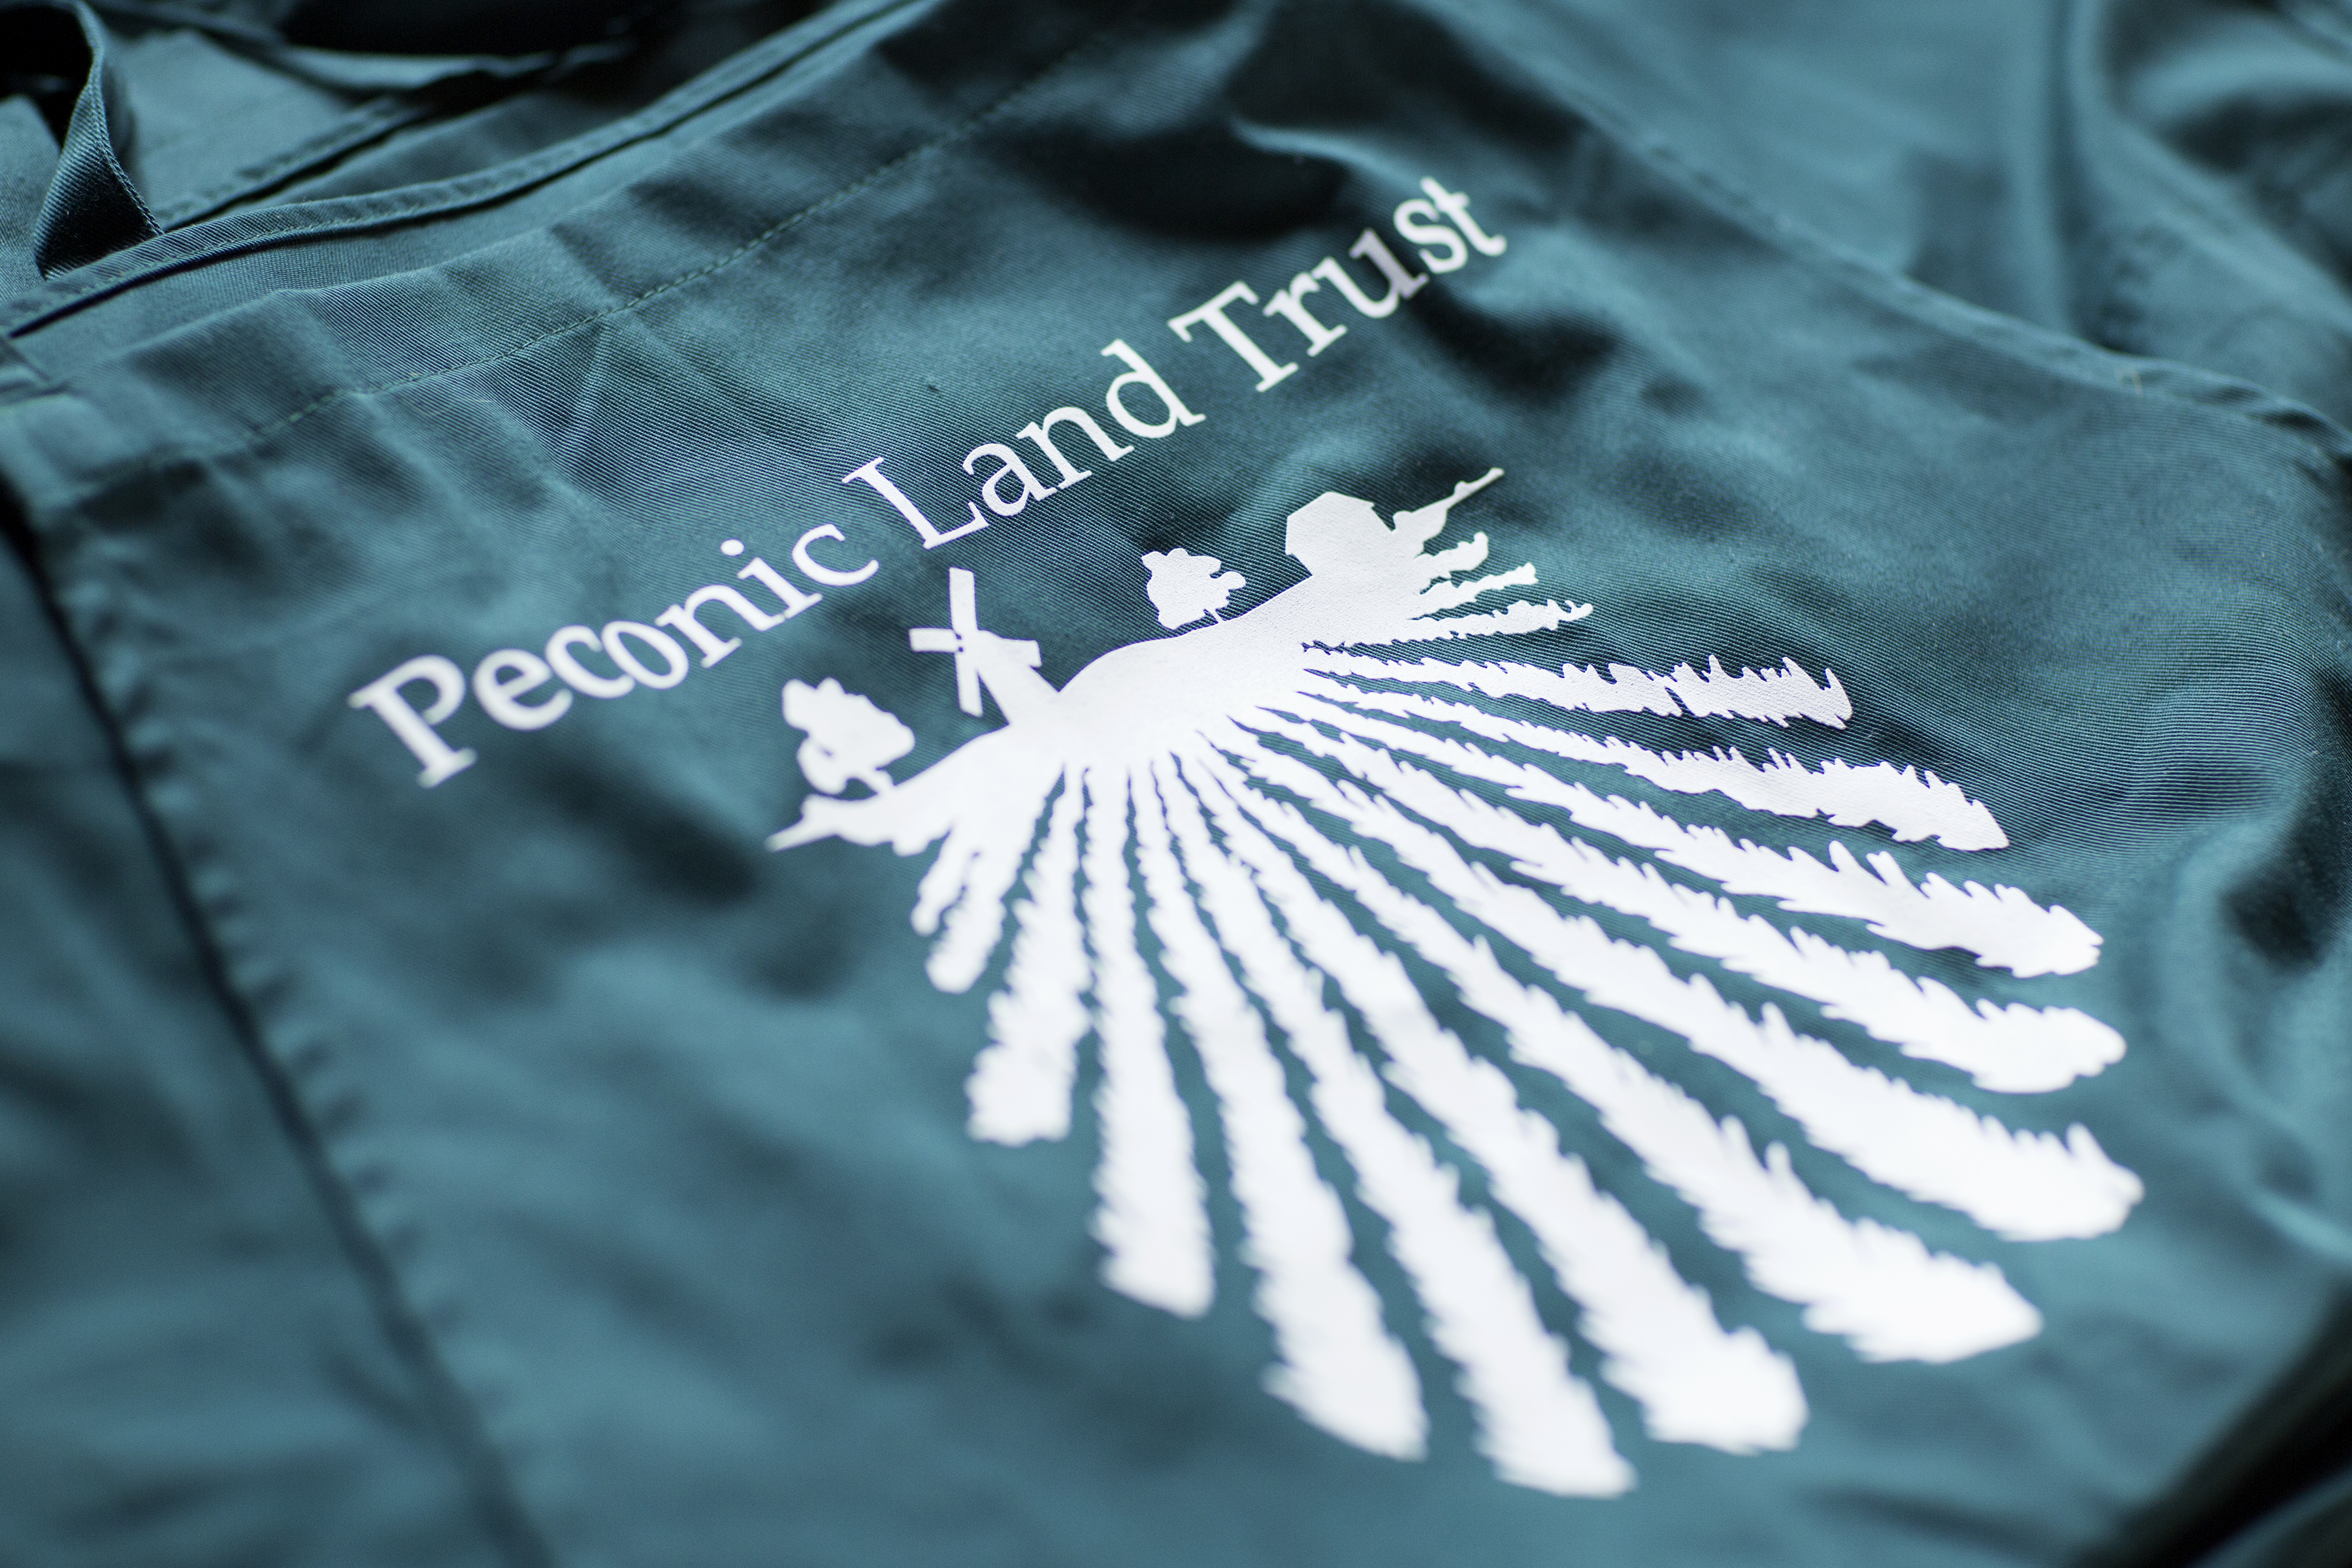 Peconic Land trust Apron